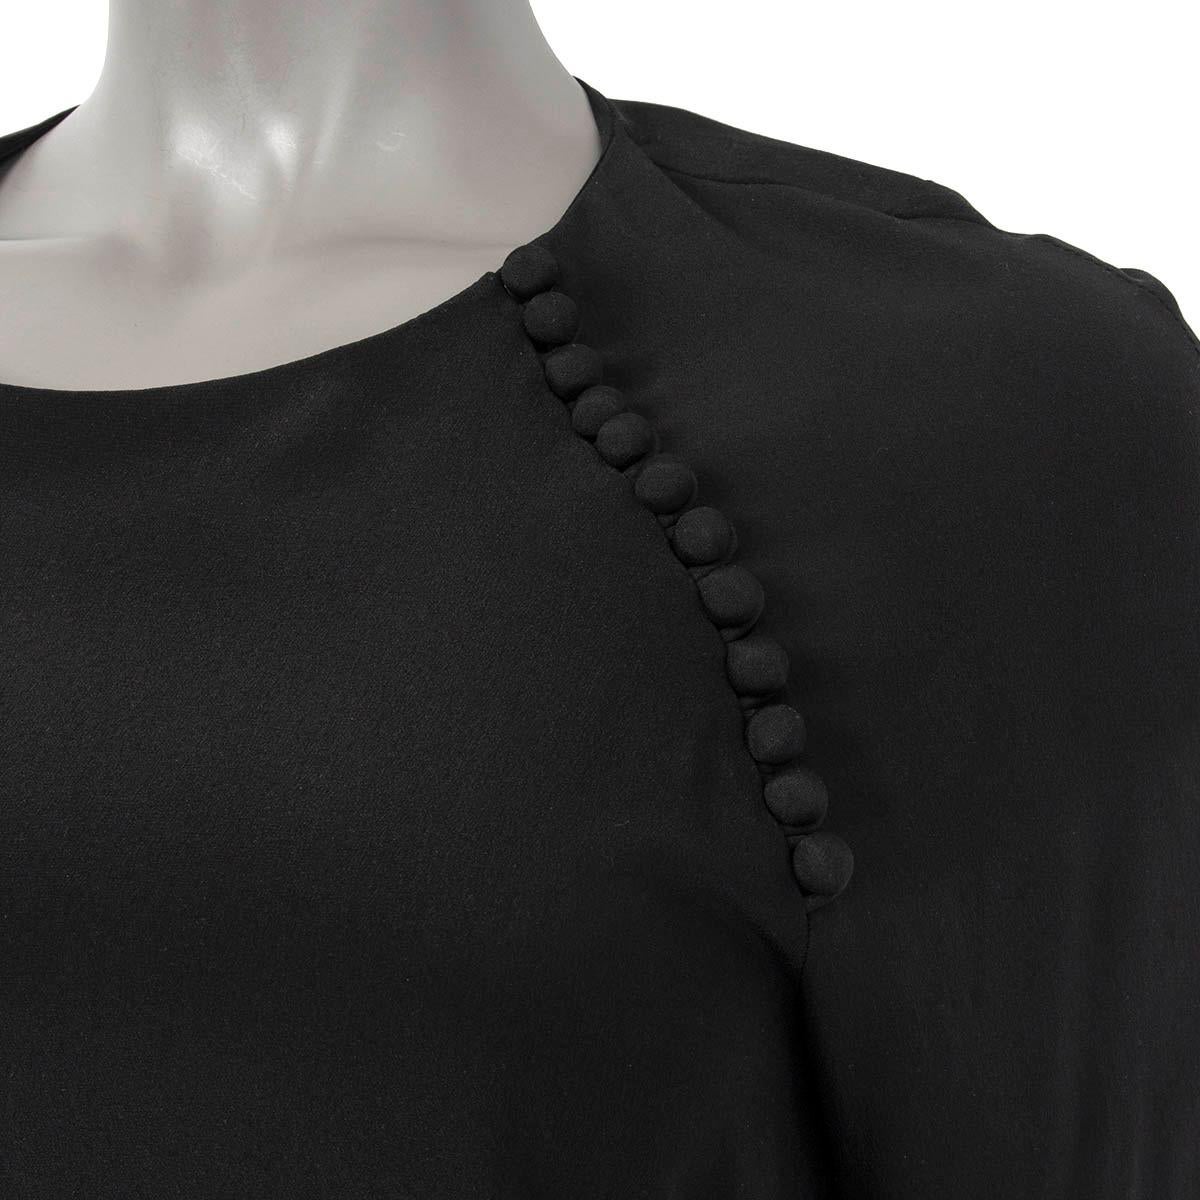 CHLOE black silk BUTTON DETAIL BISHOP SLEEVE Blouse Shirt 36 XS 2